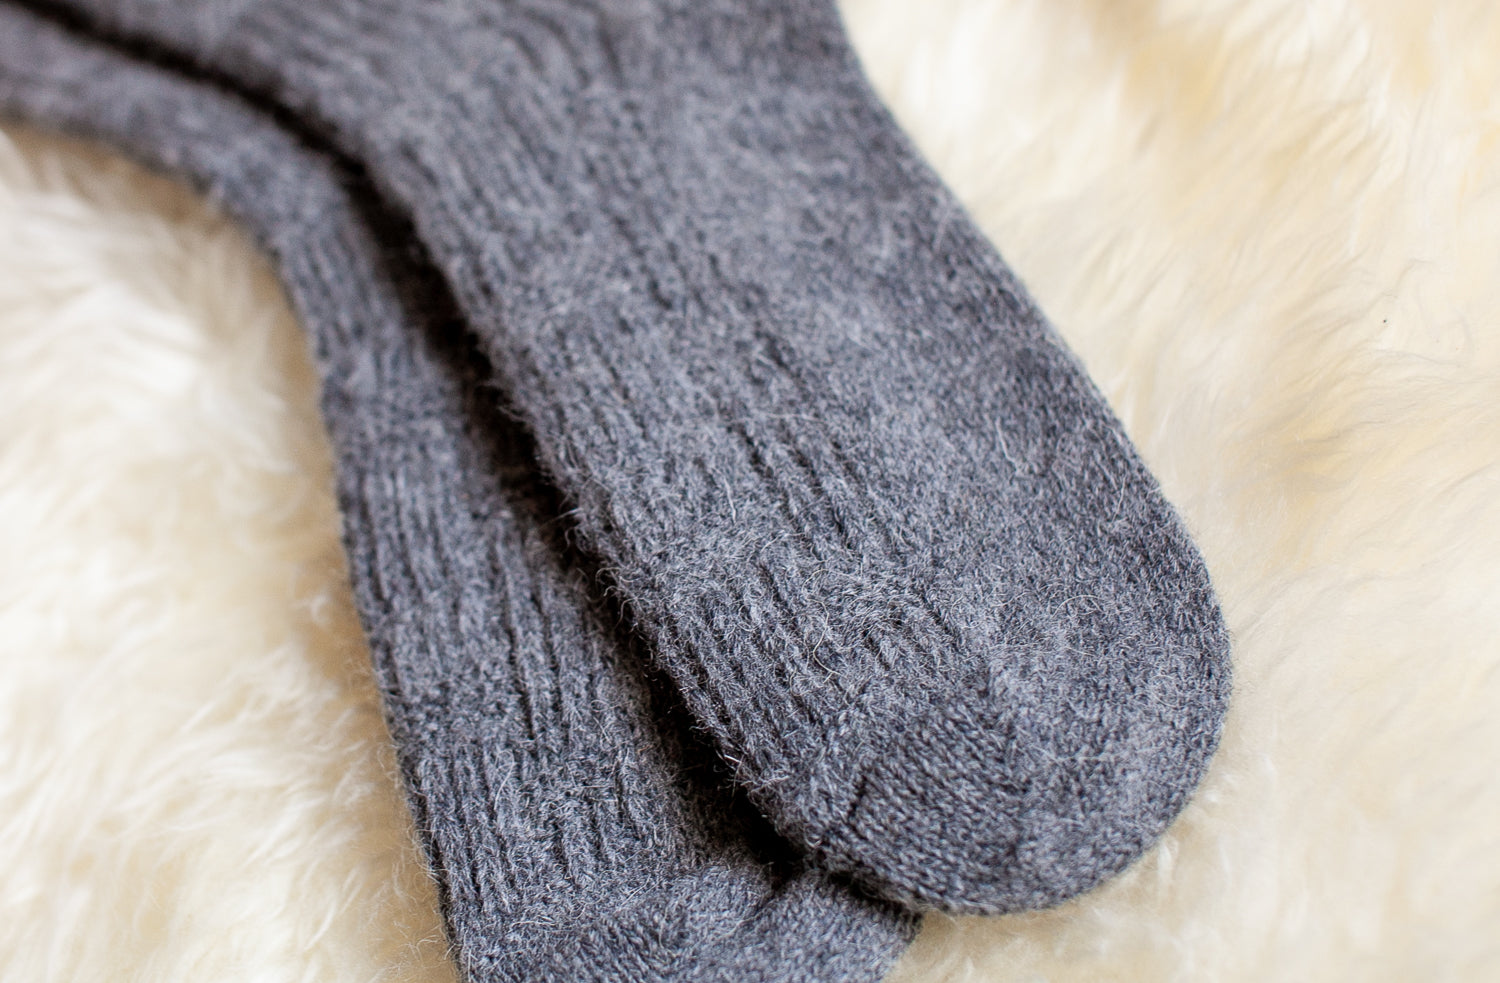 Mens woollen socks in grey colour Laying on soft Sheepskin rug